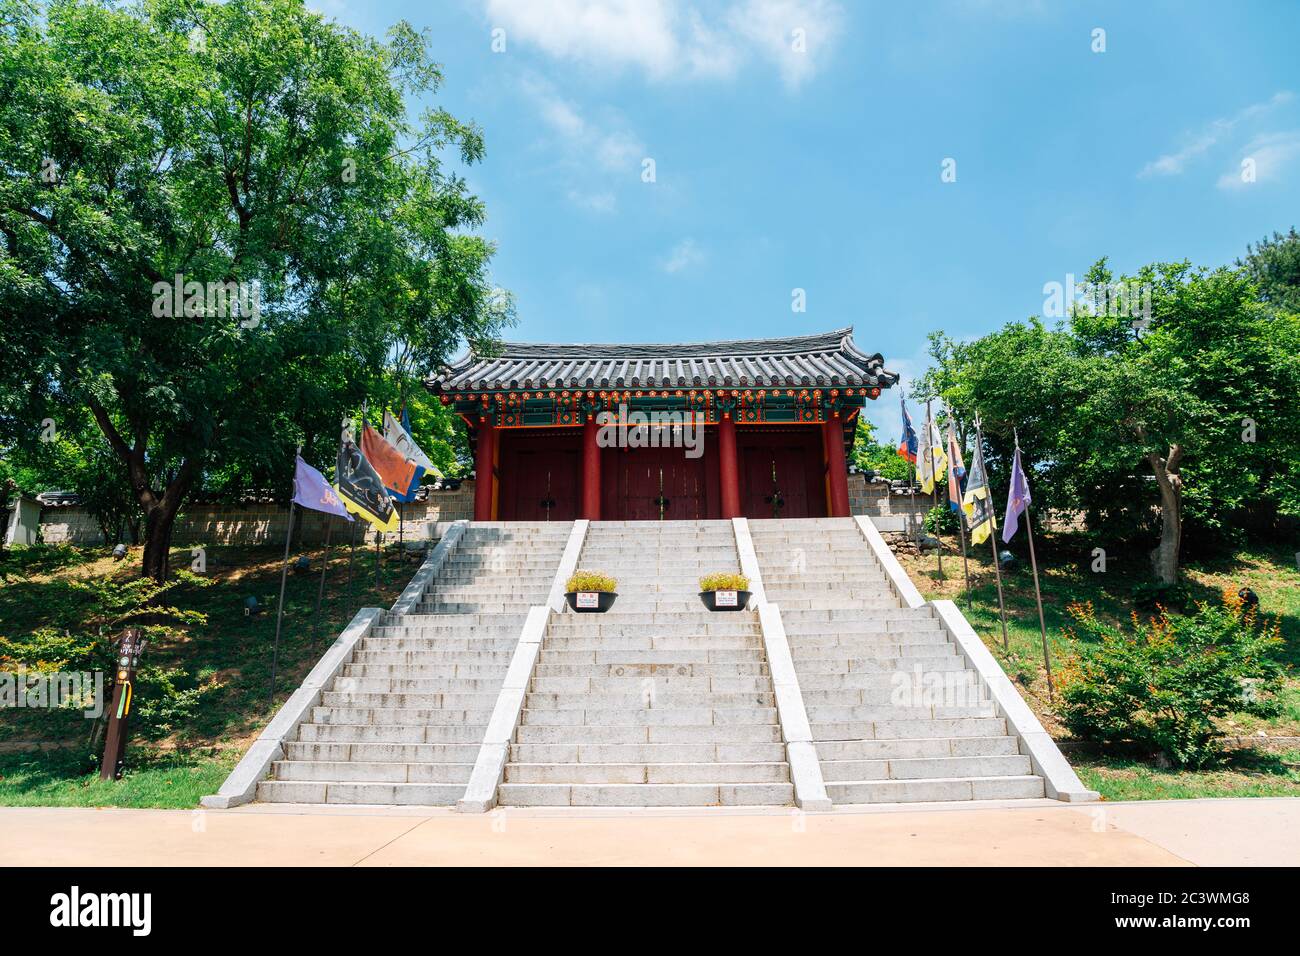 Ganghwa island Goryeogung Palace Site in Incheon, Korea Stock Photo